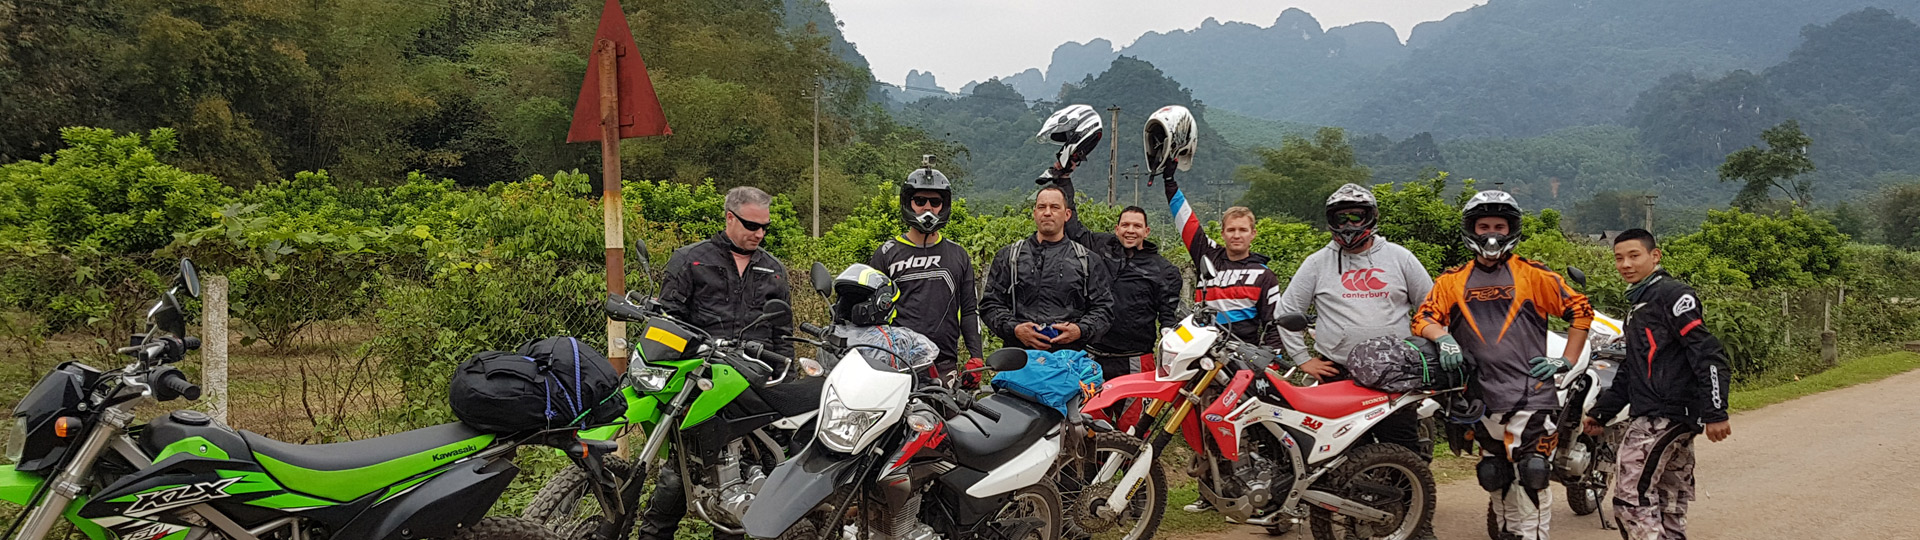 Myanmar Motorcycle Tours 3